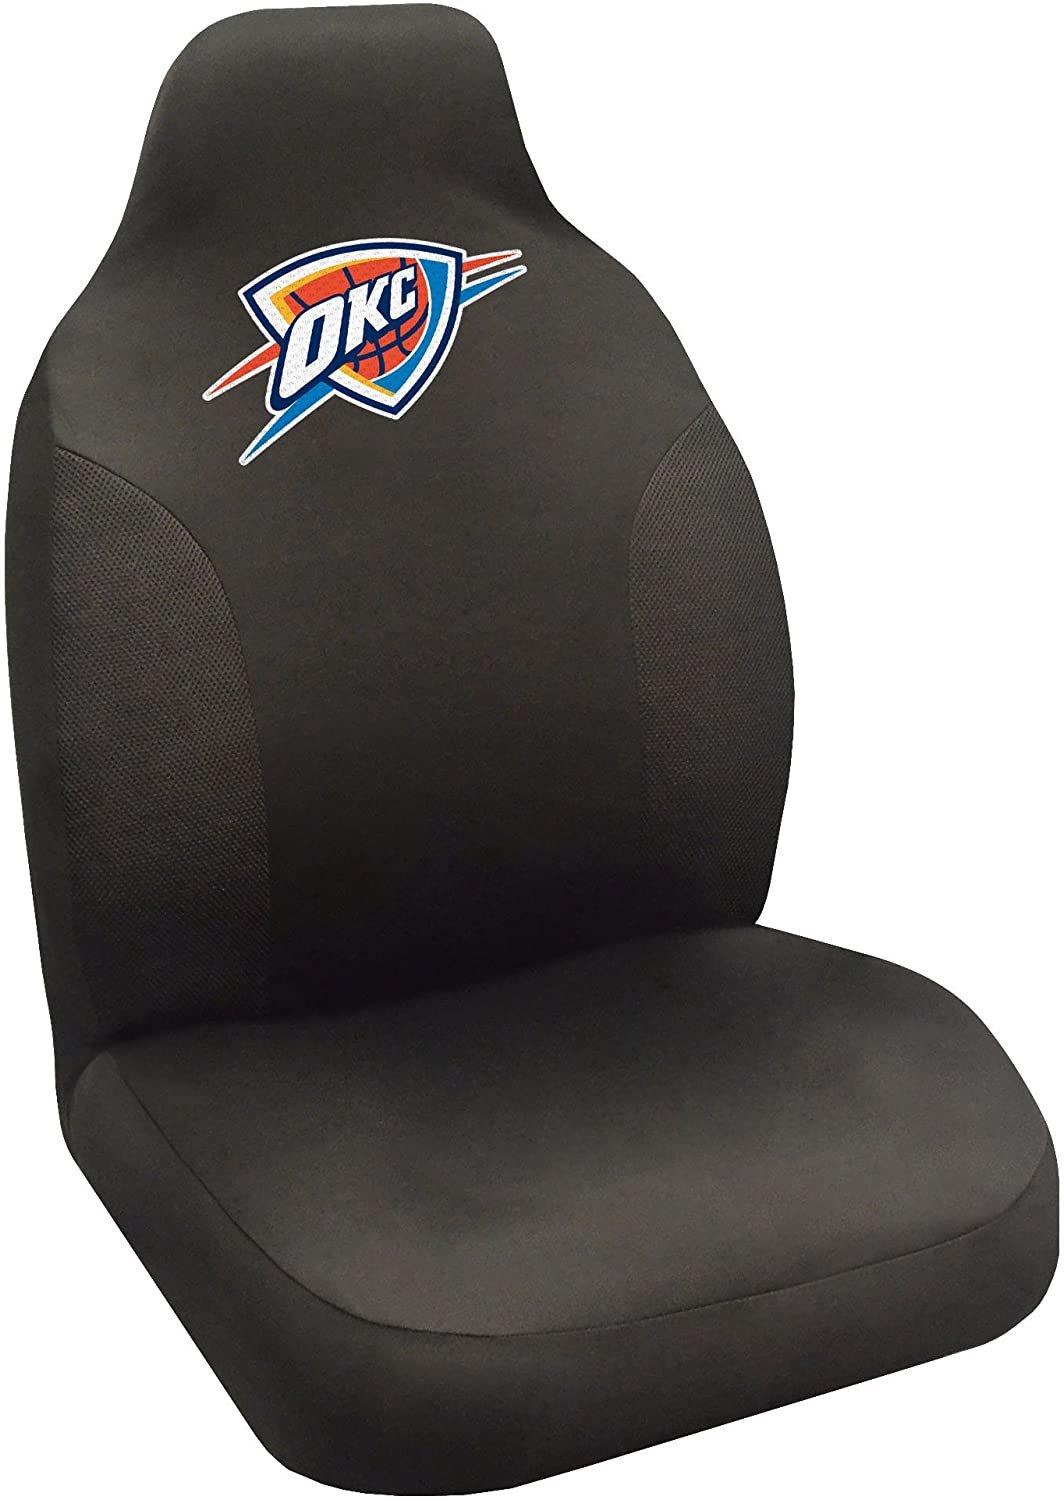 FANMATS 15127 NBA Oklahoma City Thunder Polyester Seat Cover